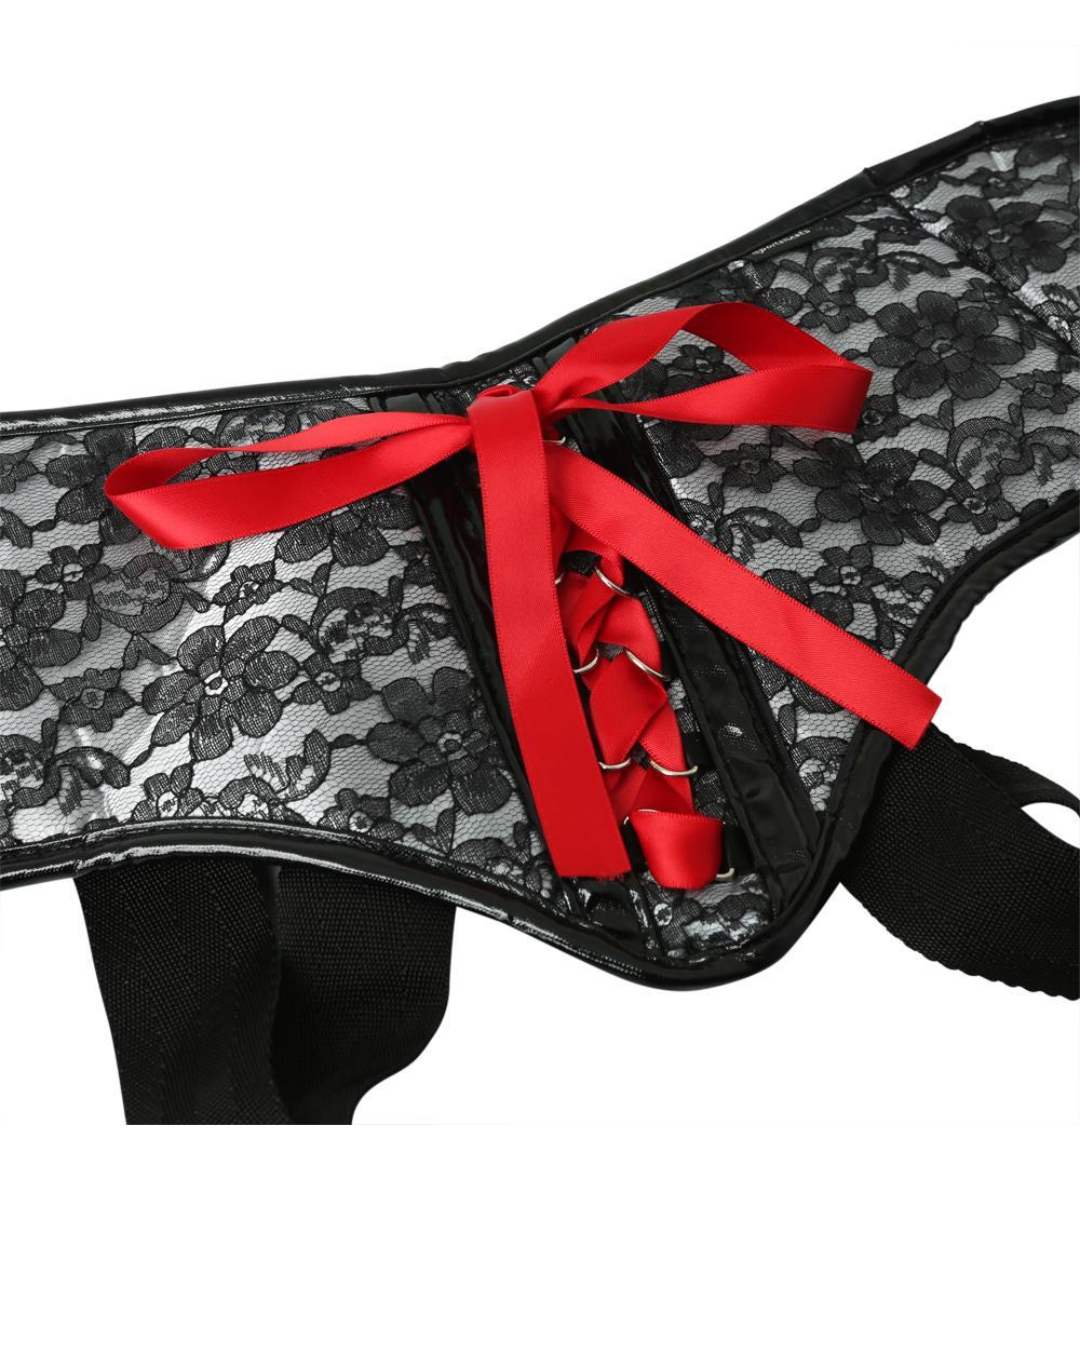 Plus Size Lace Satin Corsette Strap On - Grey/Black by Sportsheets